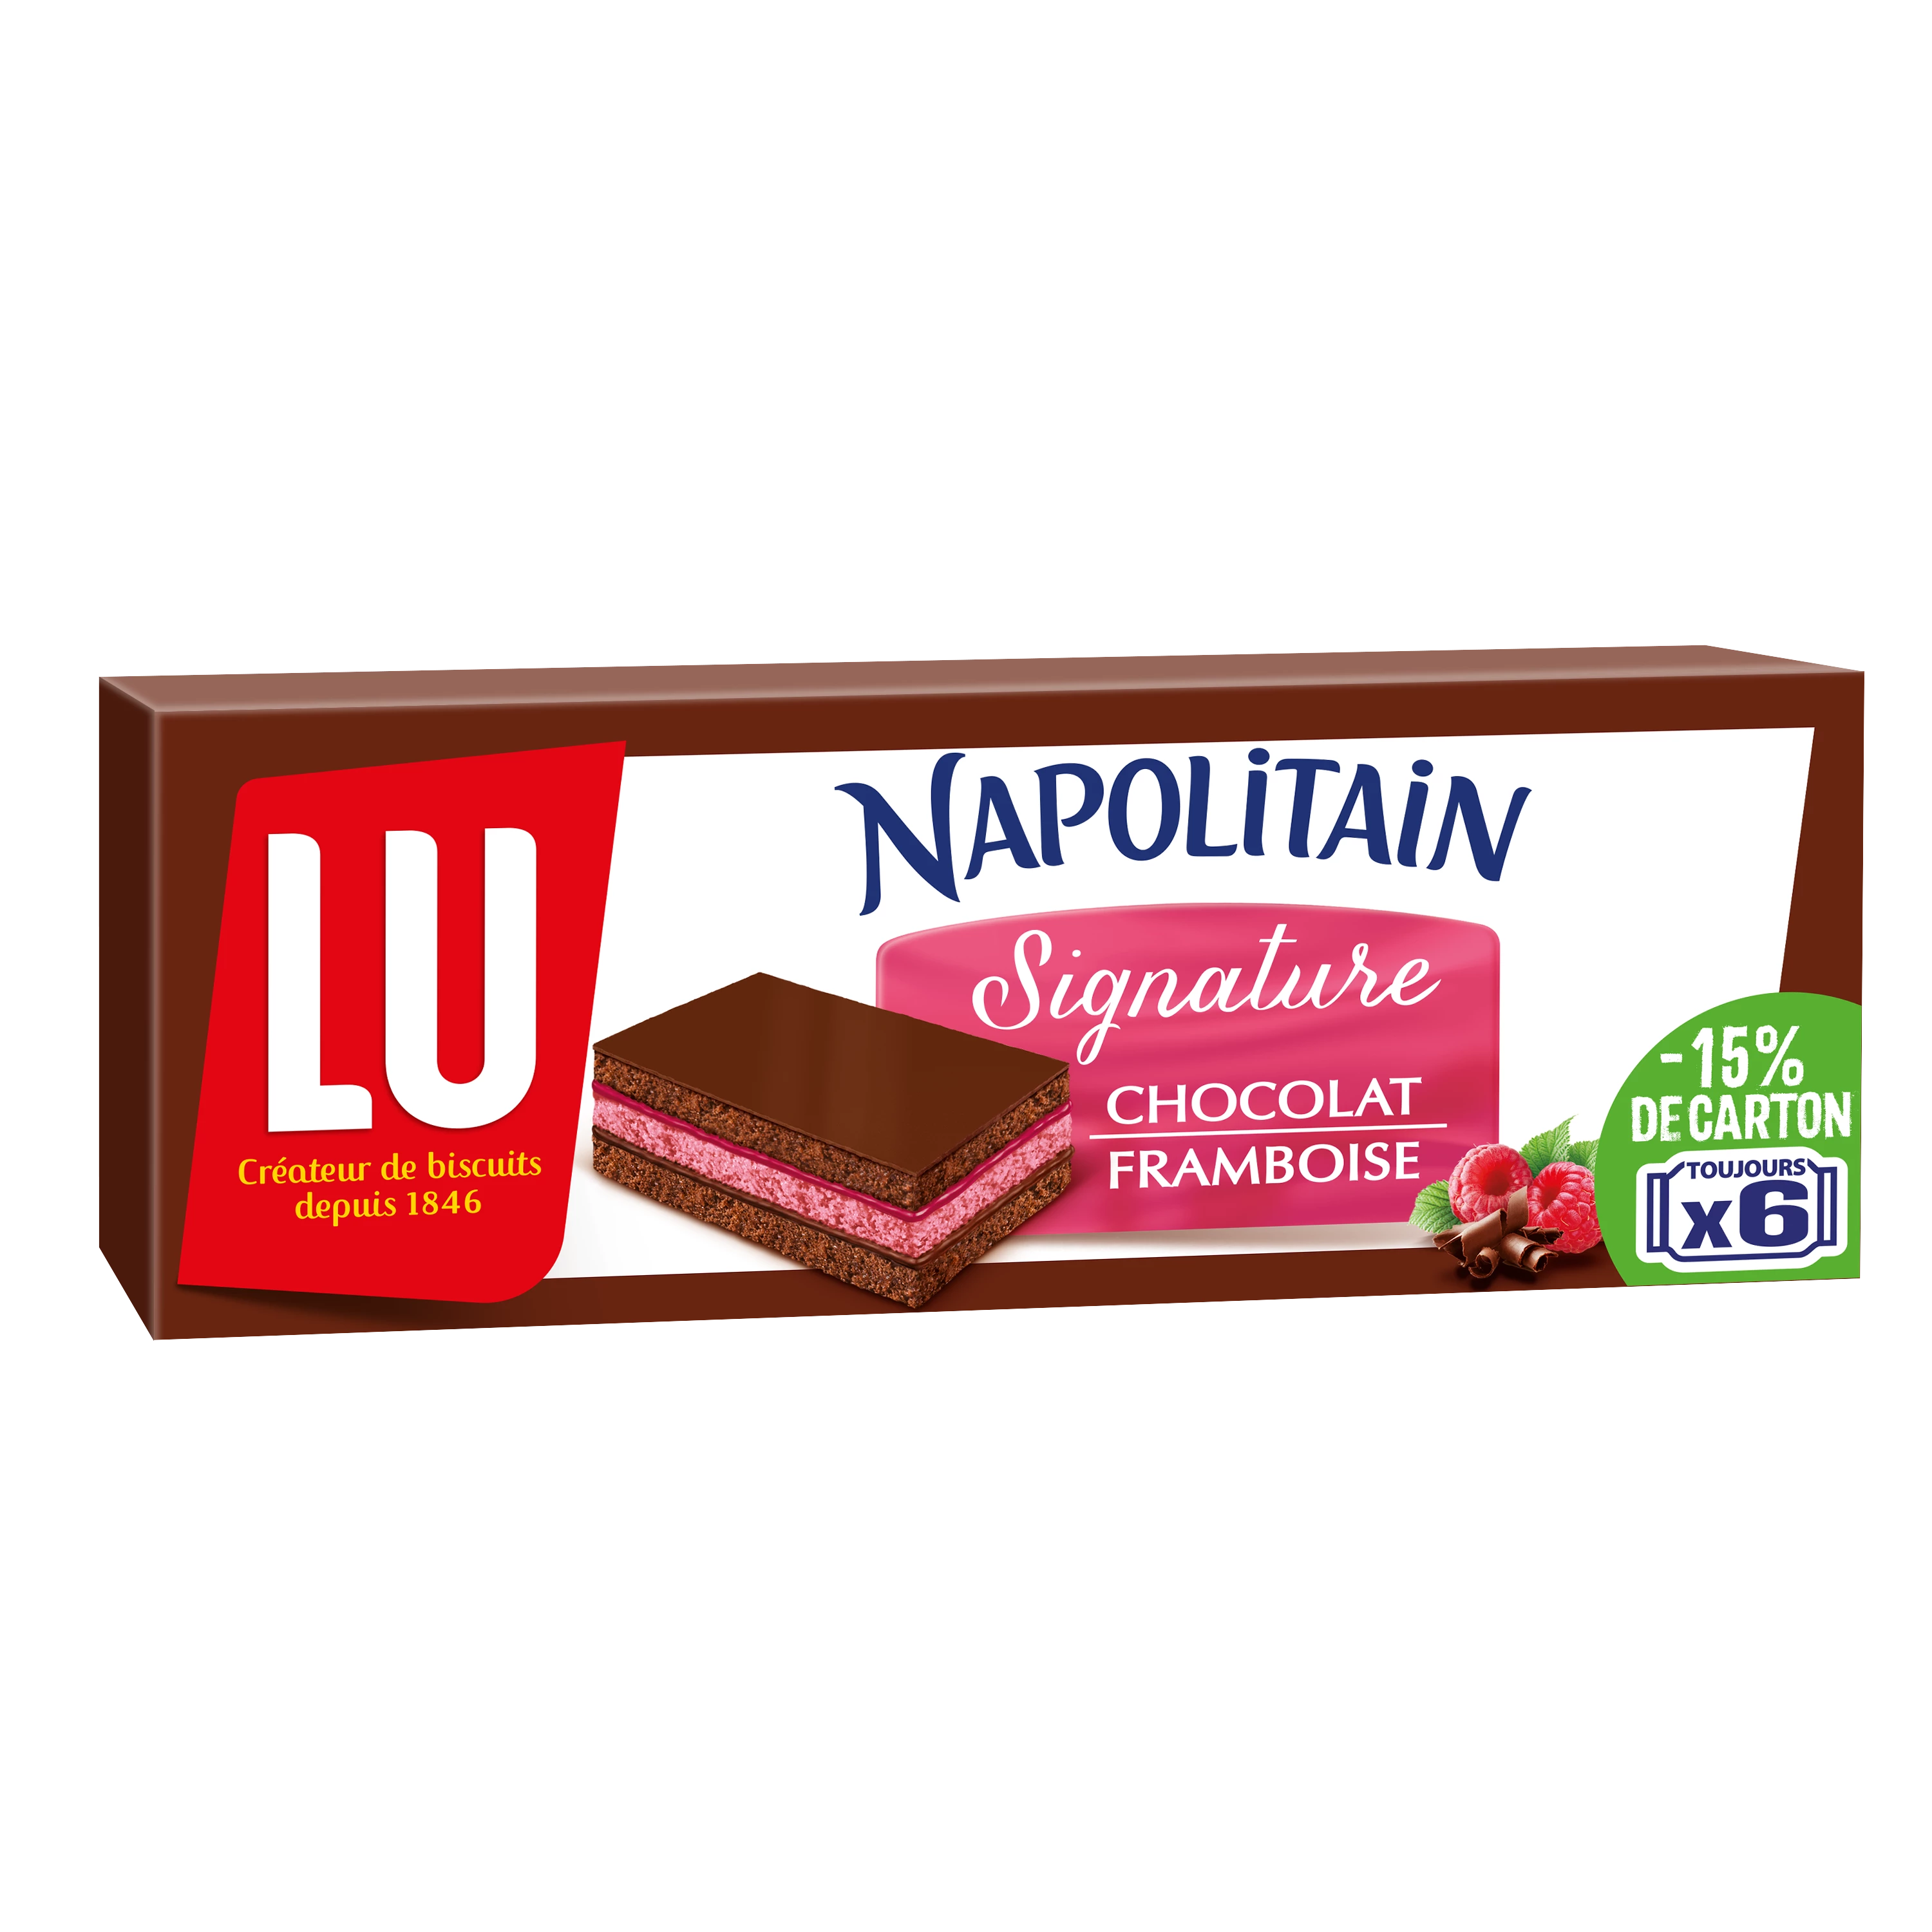 Napolitain Choco Framb 174g - LU